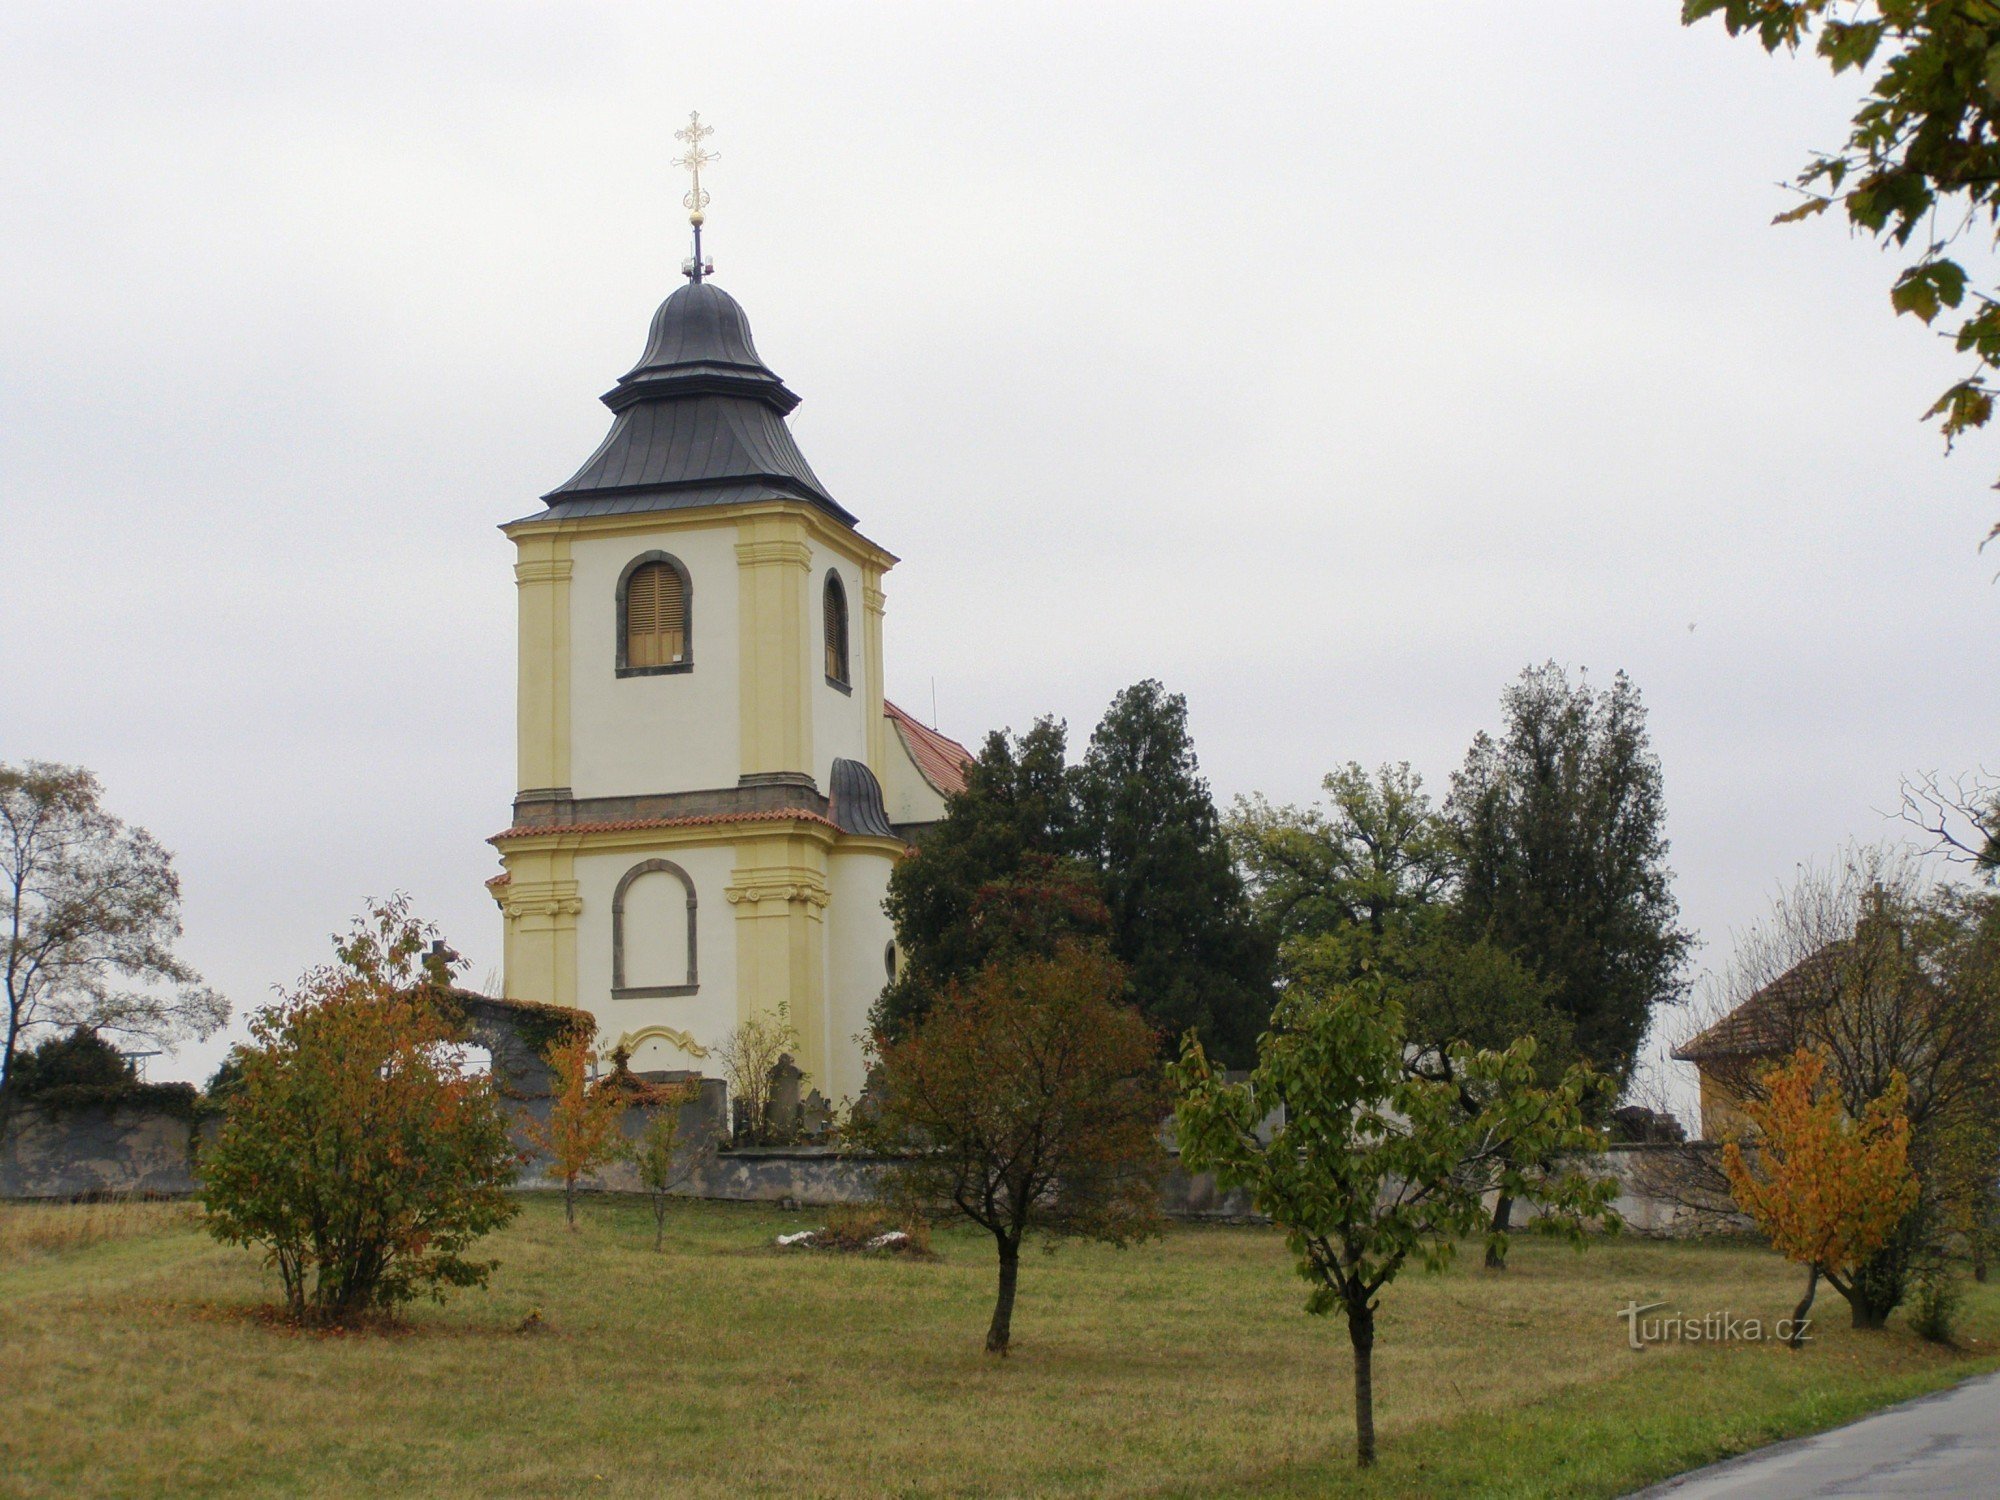 Mikulovice - Nhà thờ St. Wenceslas